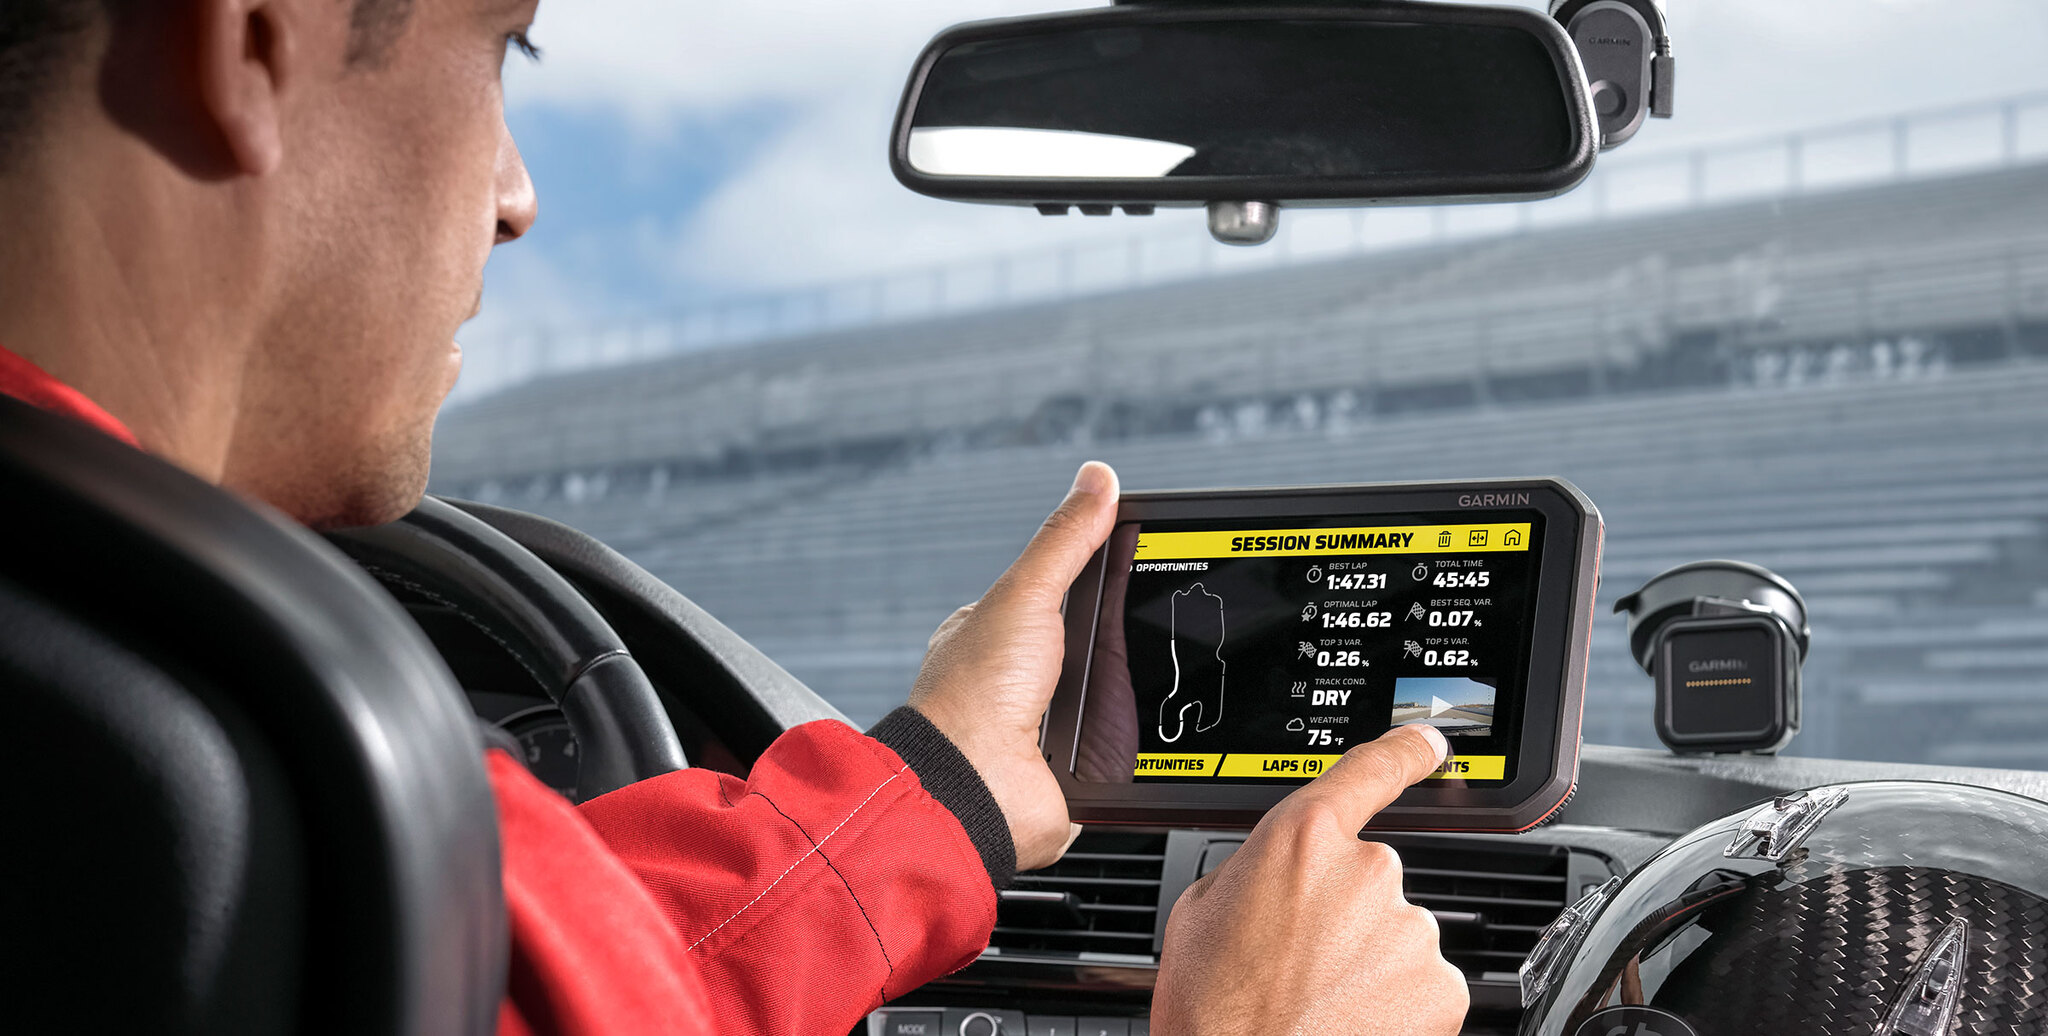 mosaik arv pilot This Garmin GPS aims to improve motorsport's lap times and more | TechCrunch